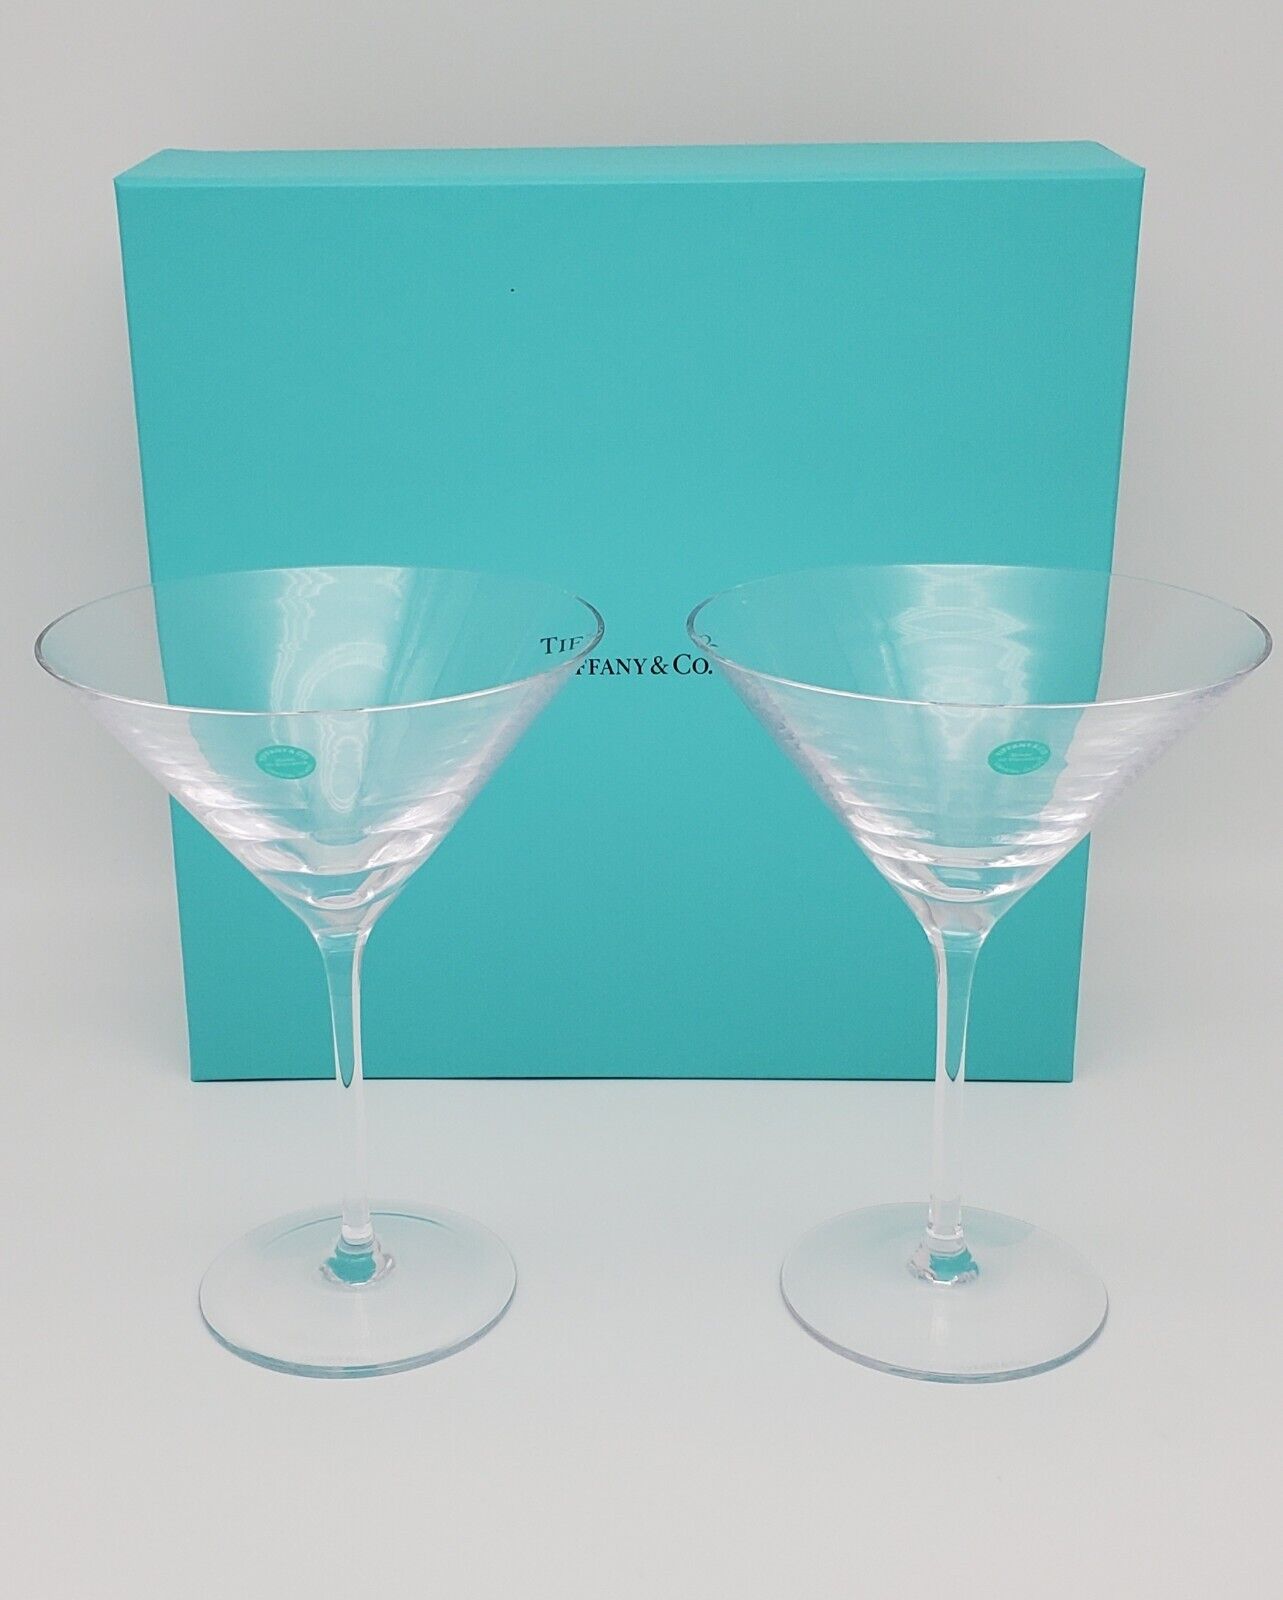 Tiffany & Co. Crystal Glass Martini Glasses (2) Original Packaging/Box